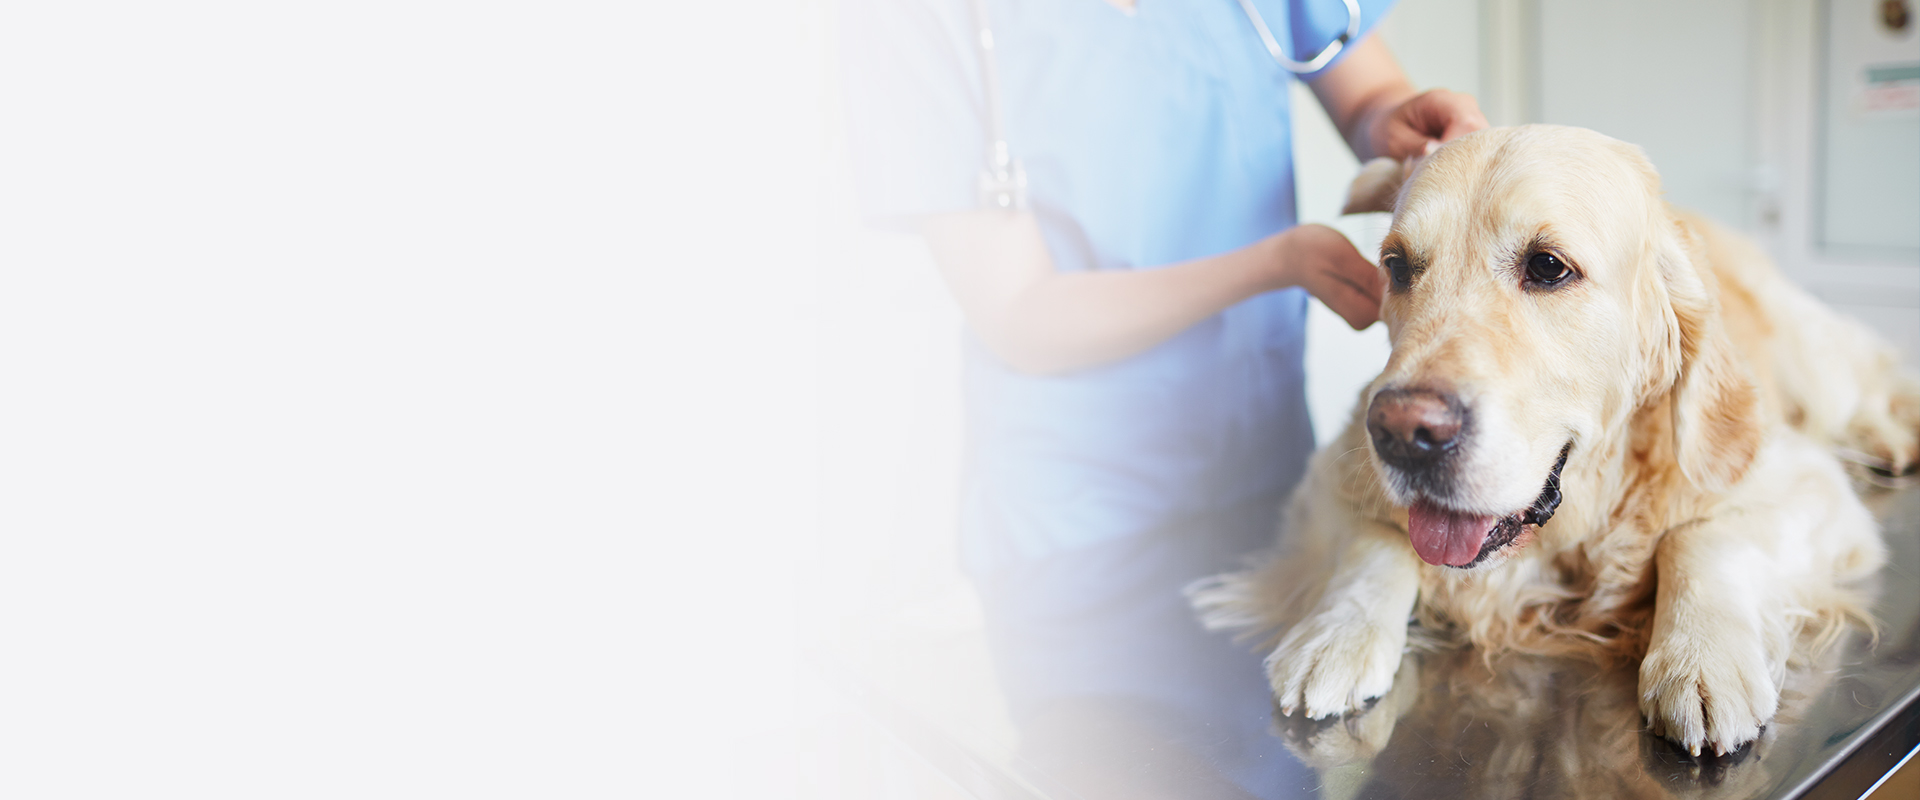 Tierarzt überprüft Golden Retriever-Hund